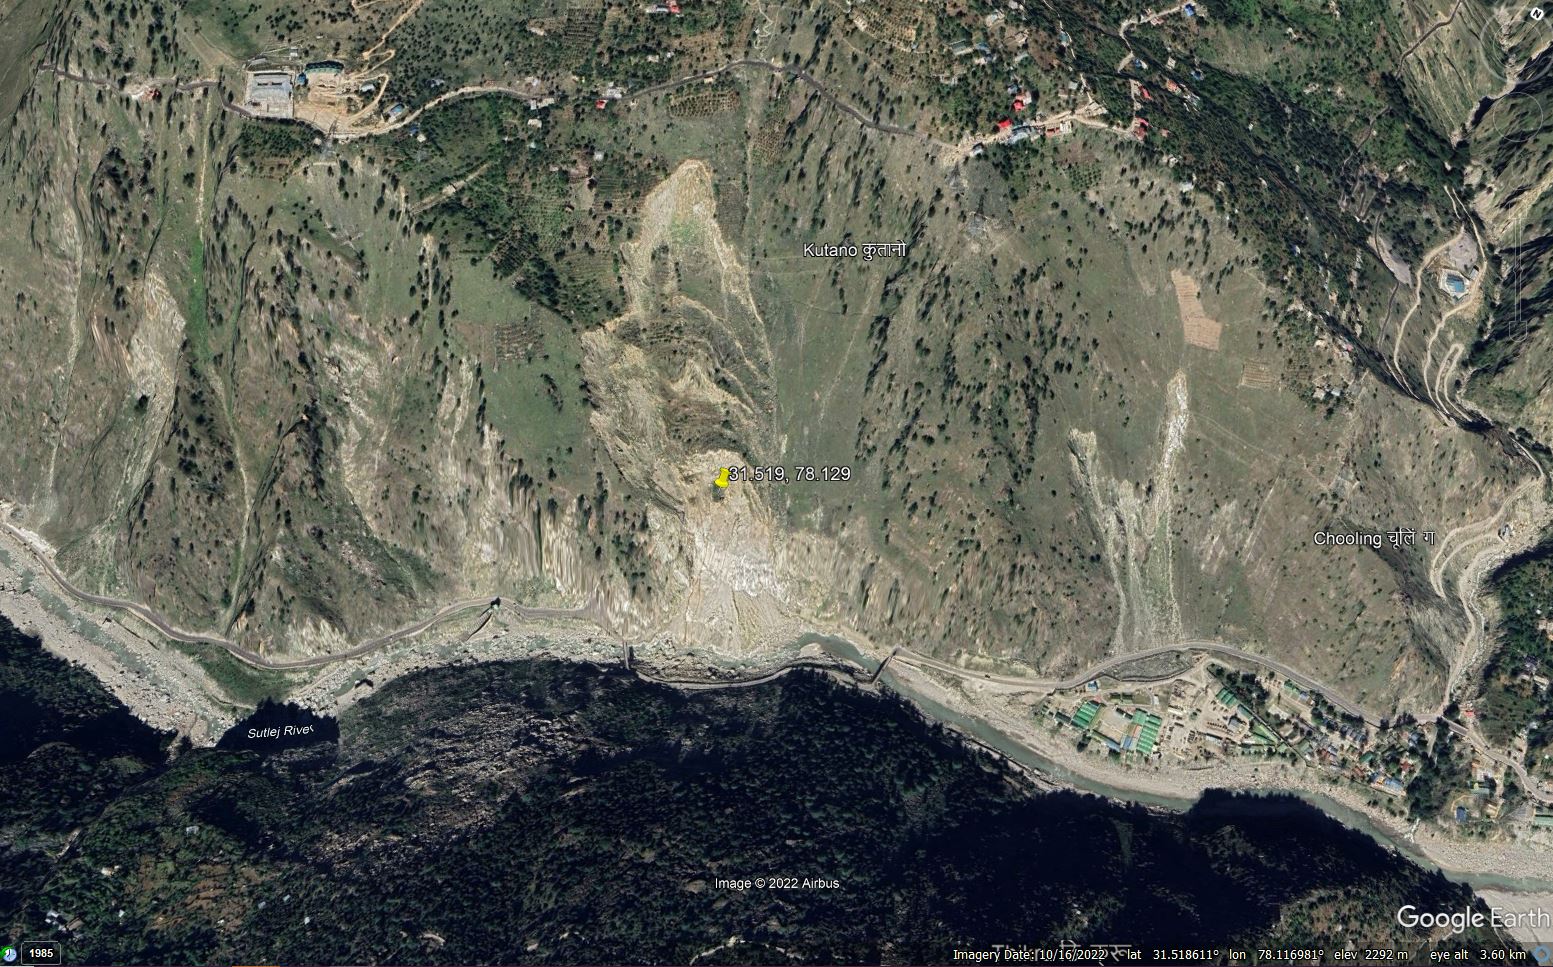 Google Earth image of the Urni landslide in Kinnaur, India.